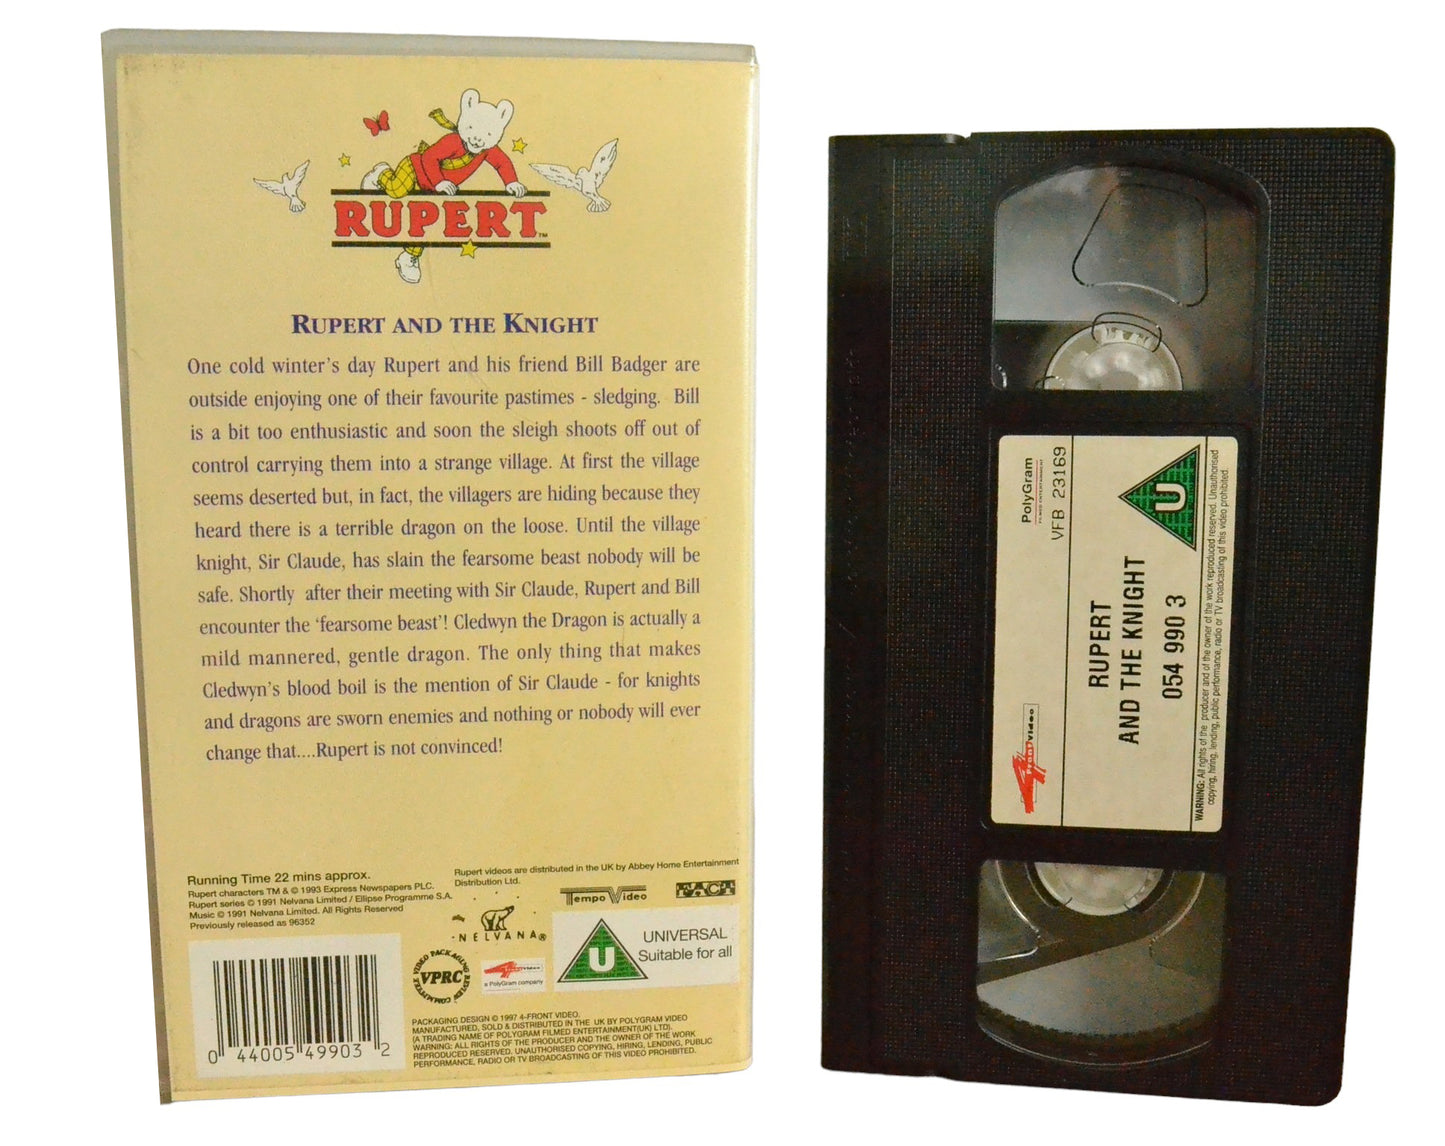 The All New Adventures of Rupert - Rupert and The Knight - PolyGram Video - 549903 - Children - Pal - VHS-